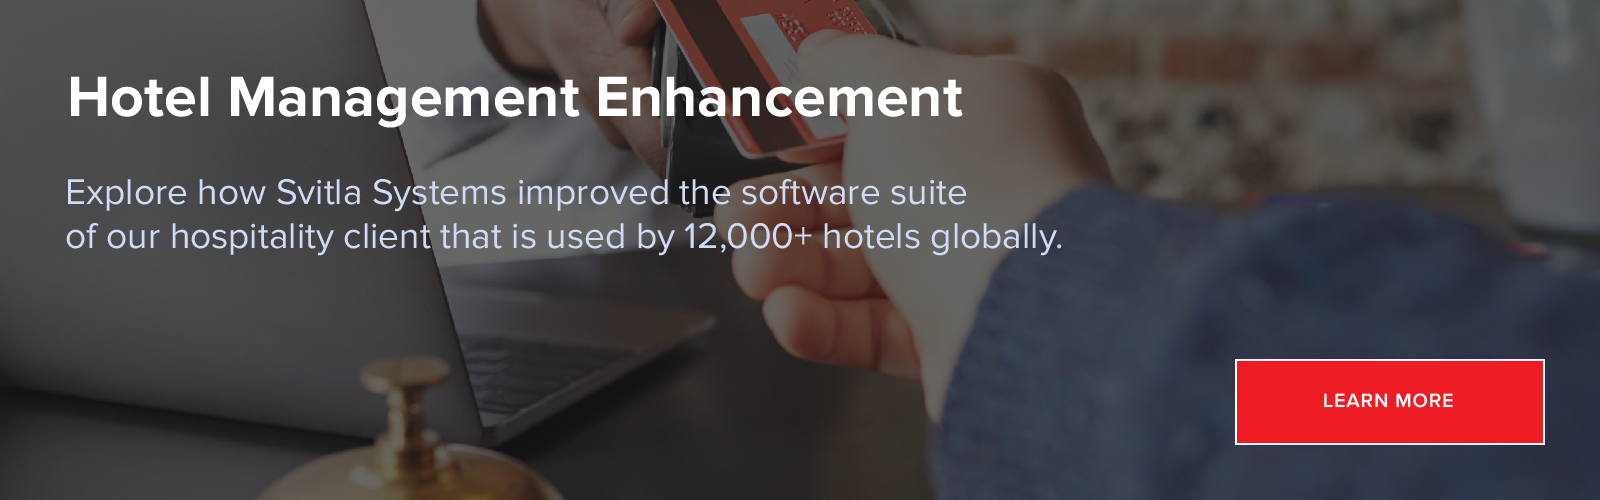 Hotel Management Enhancement 